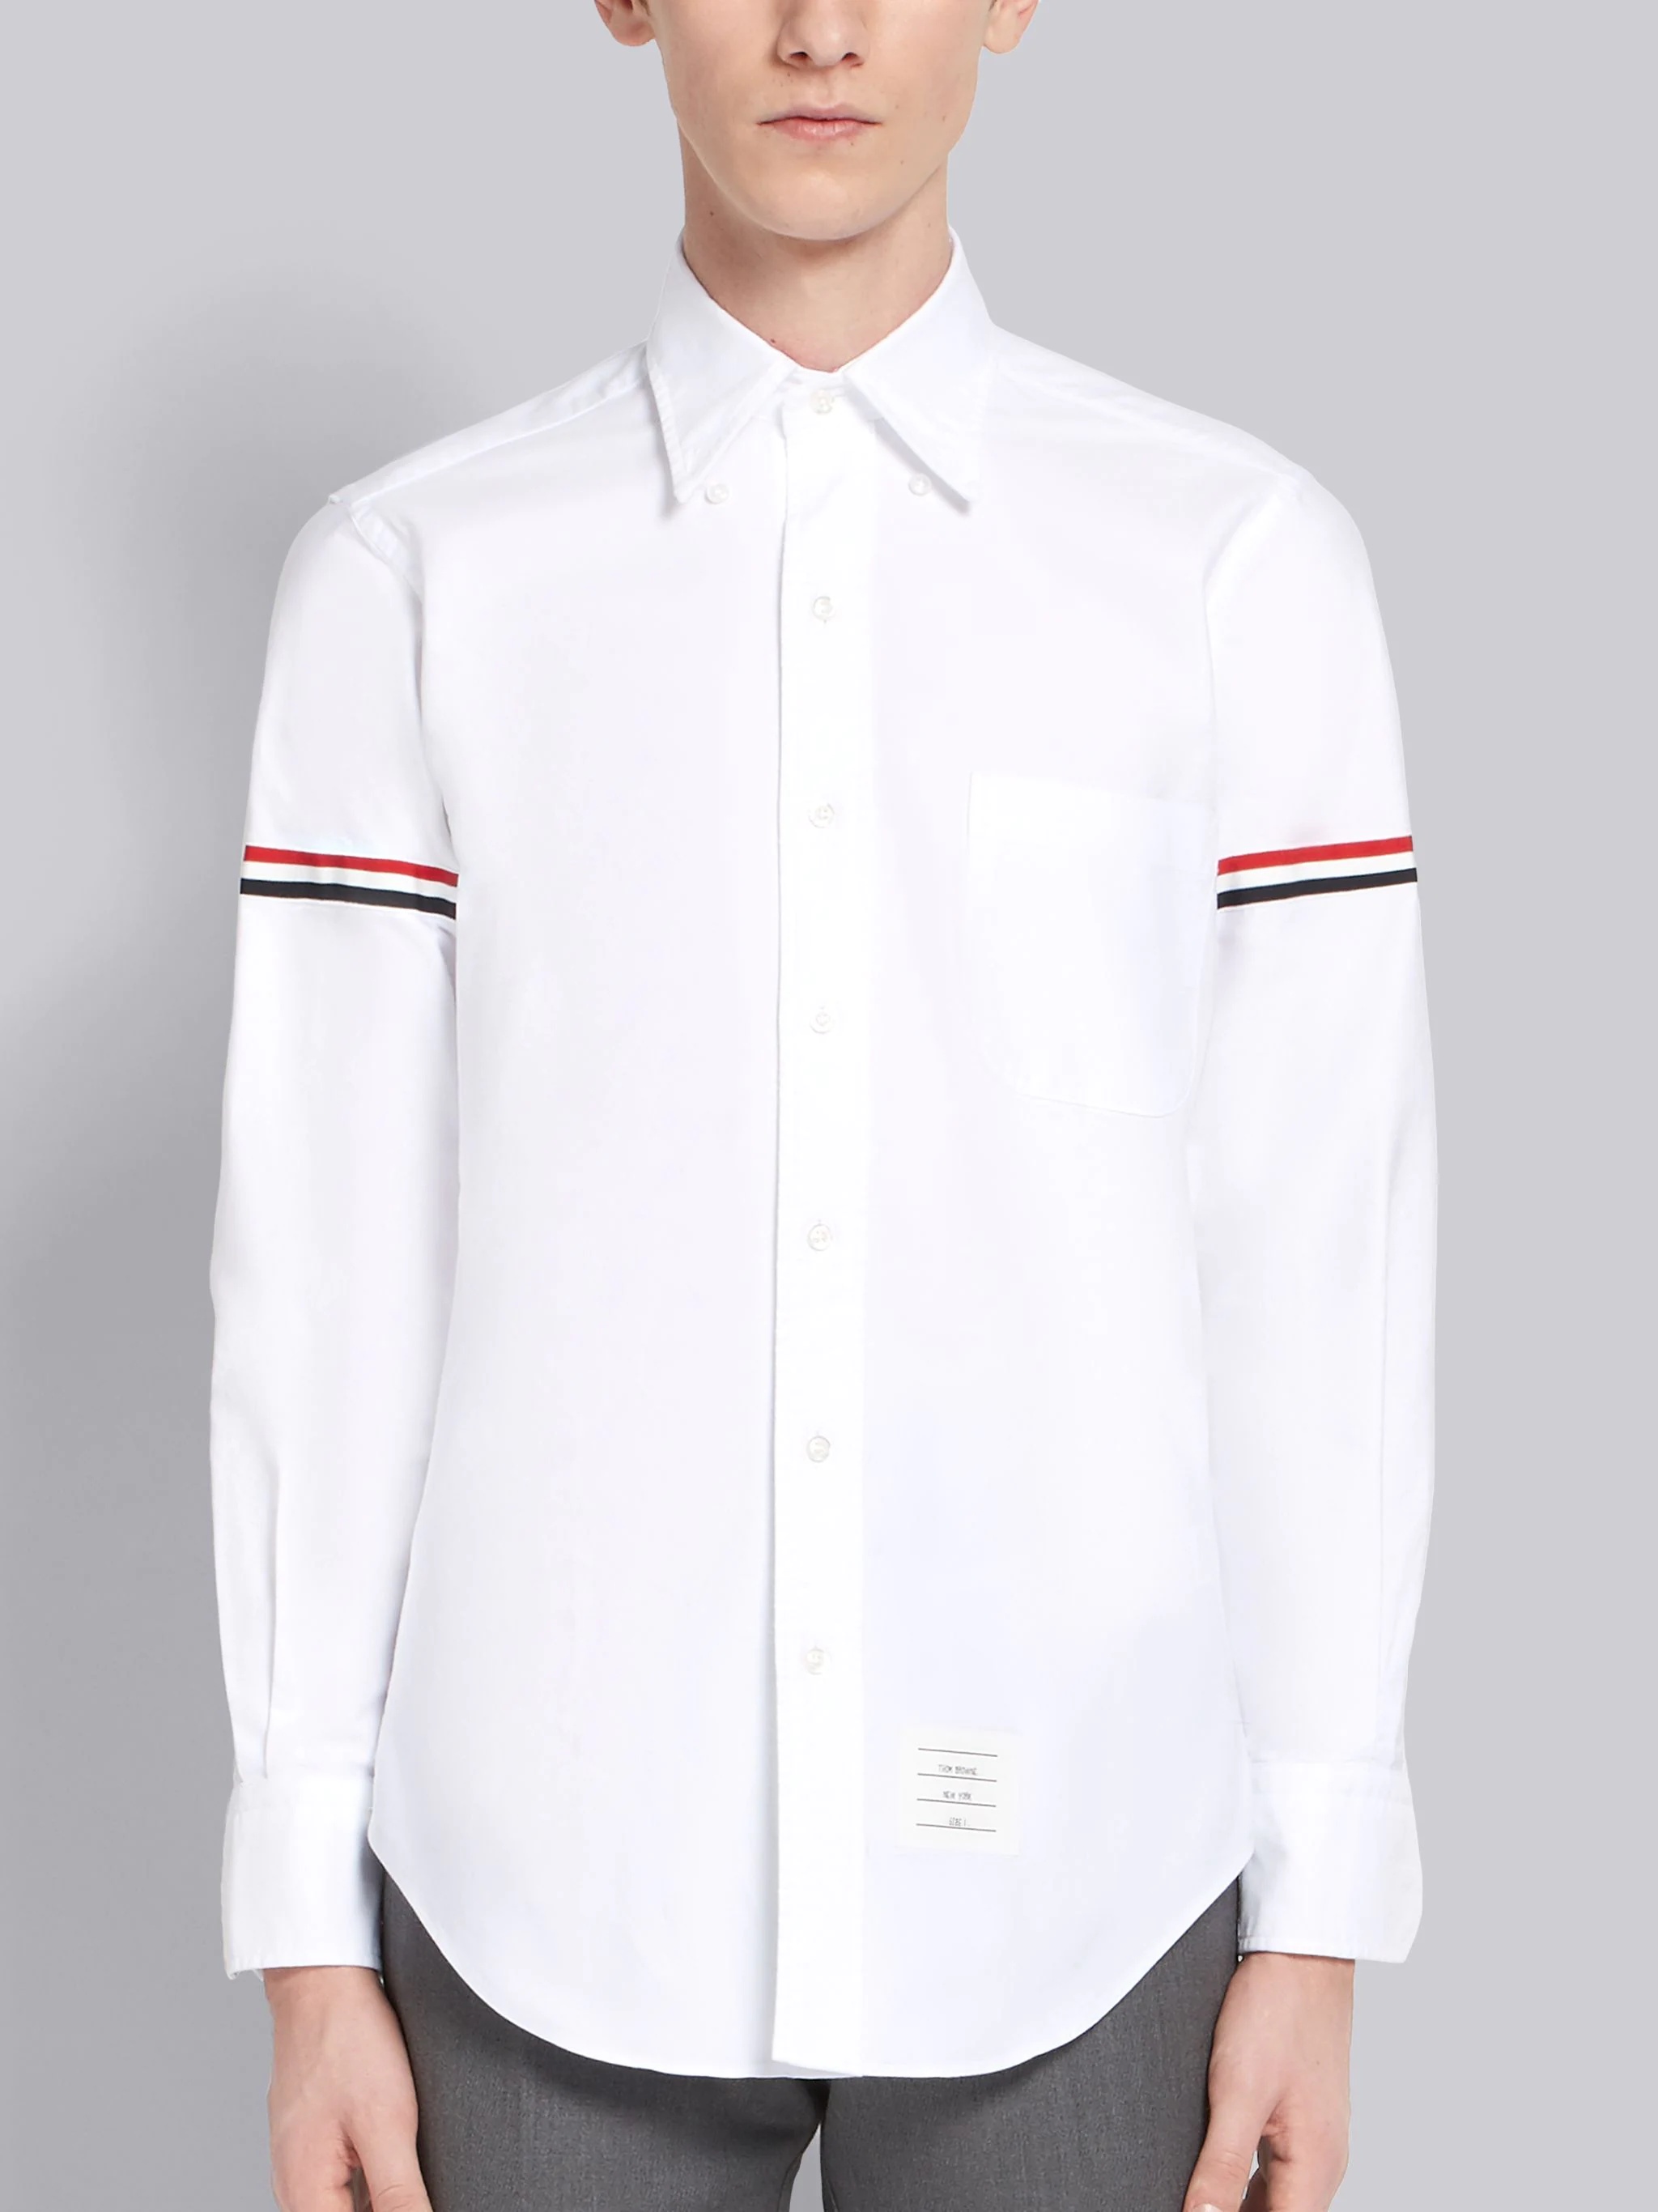 White Oxford Striped Grosgrain Armband Classic Shirt - 3